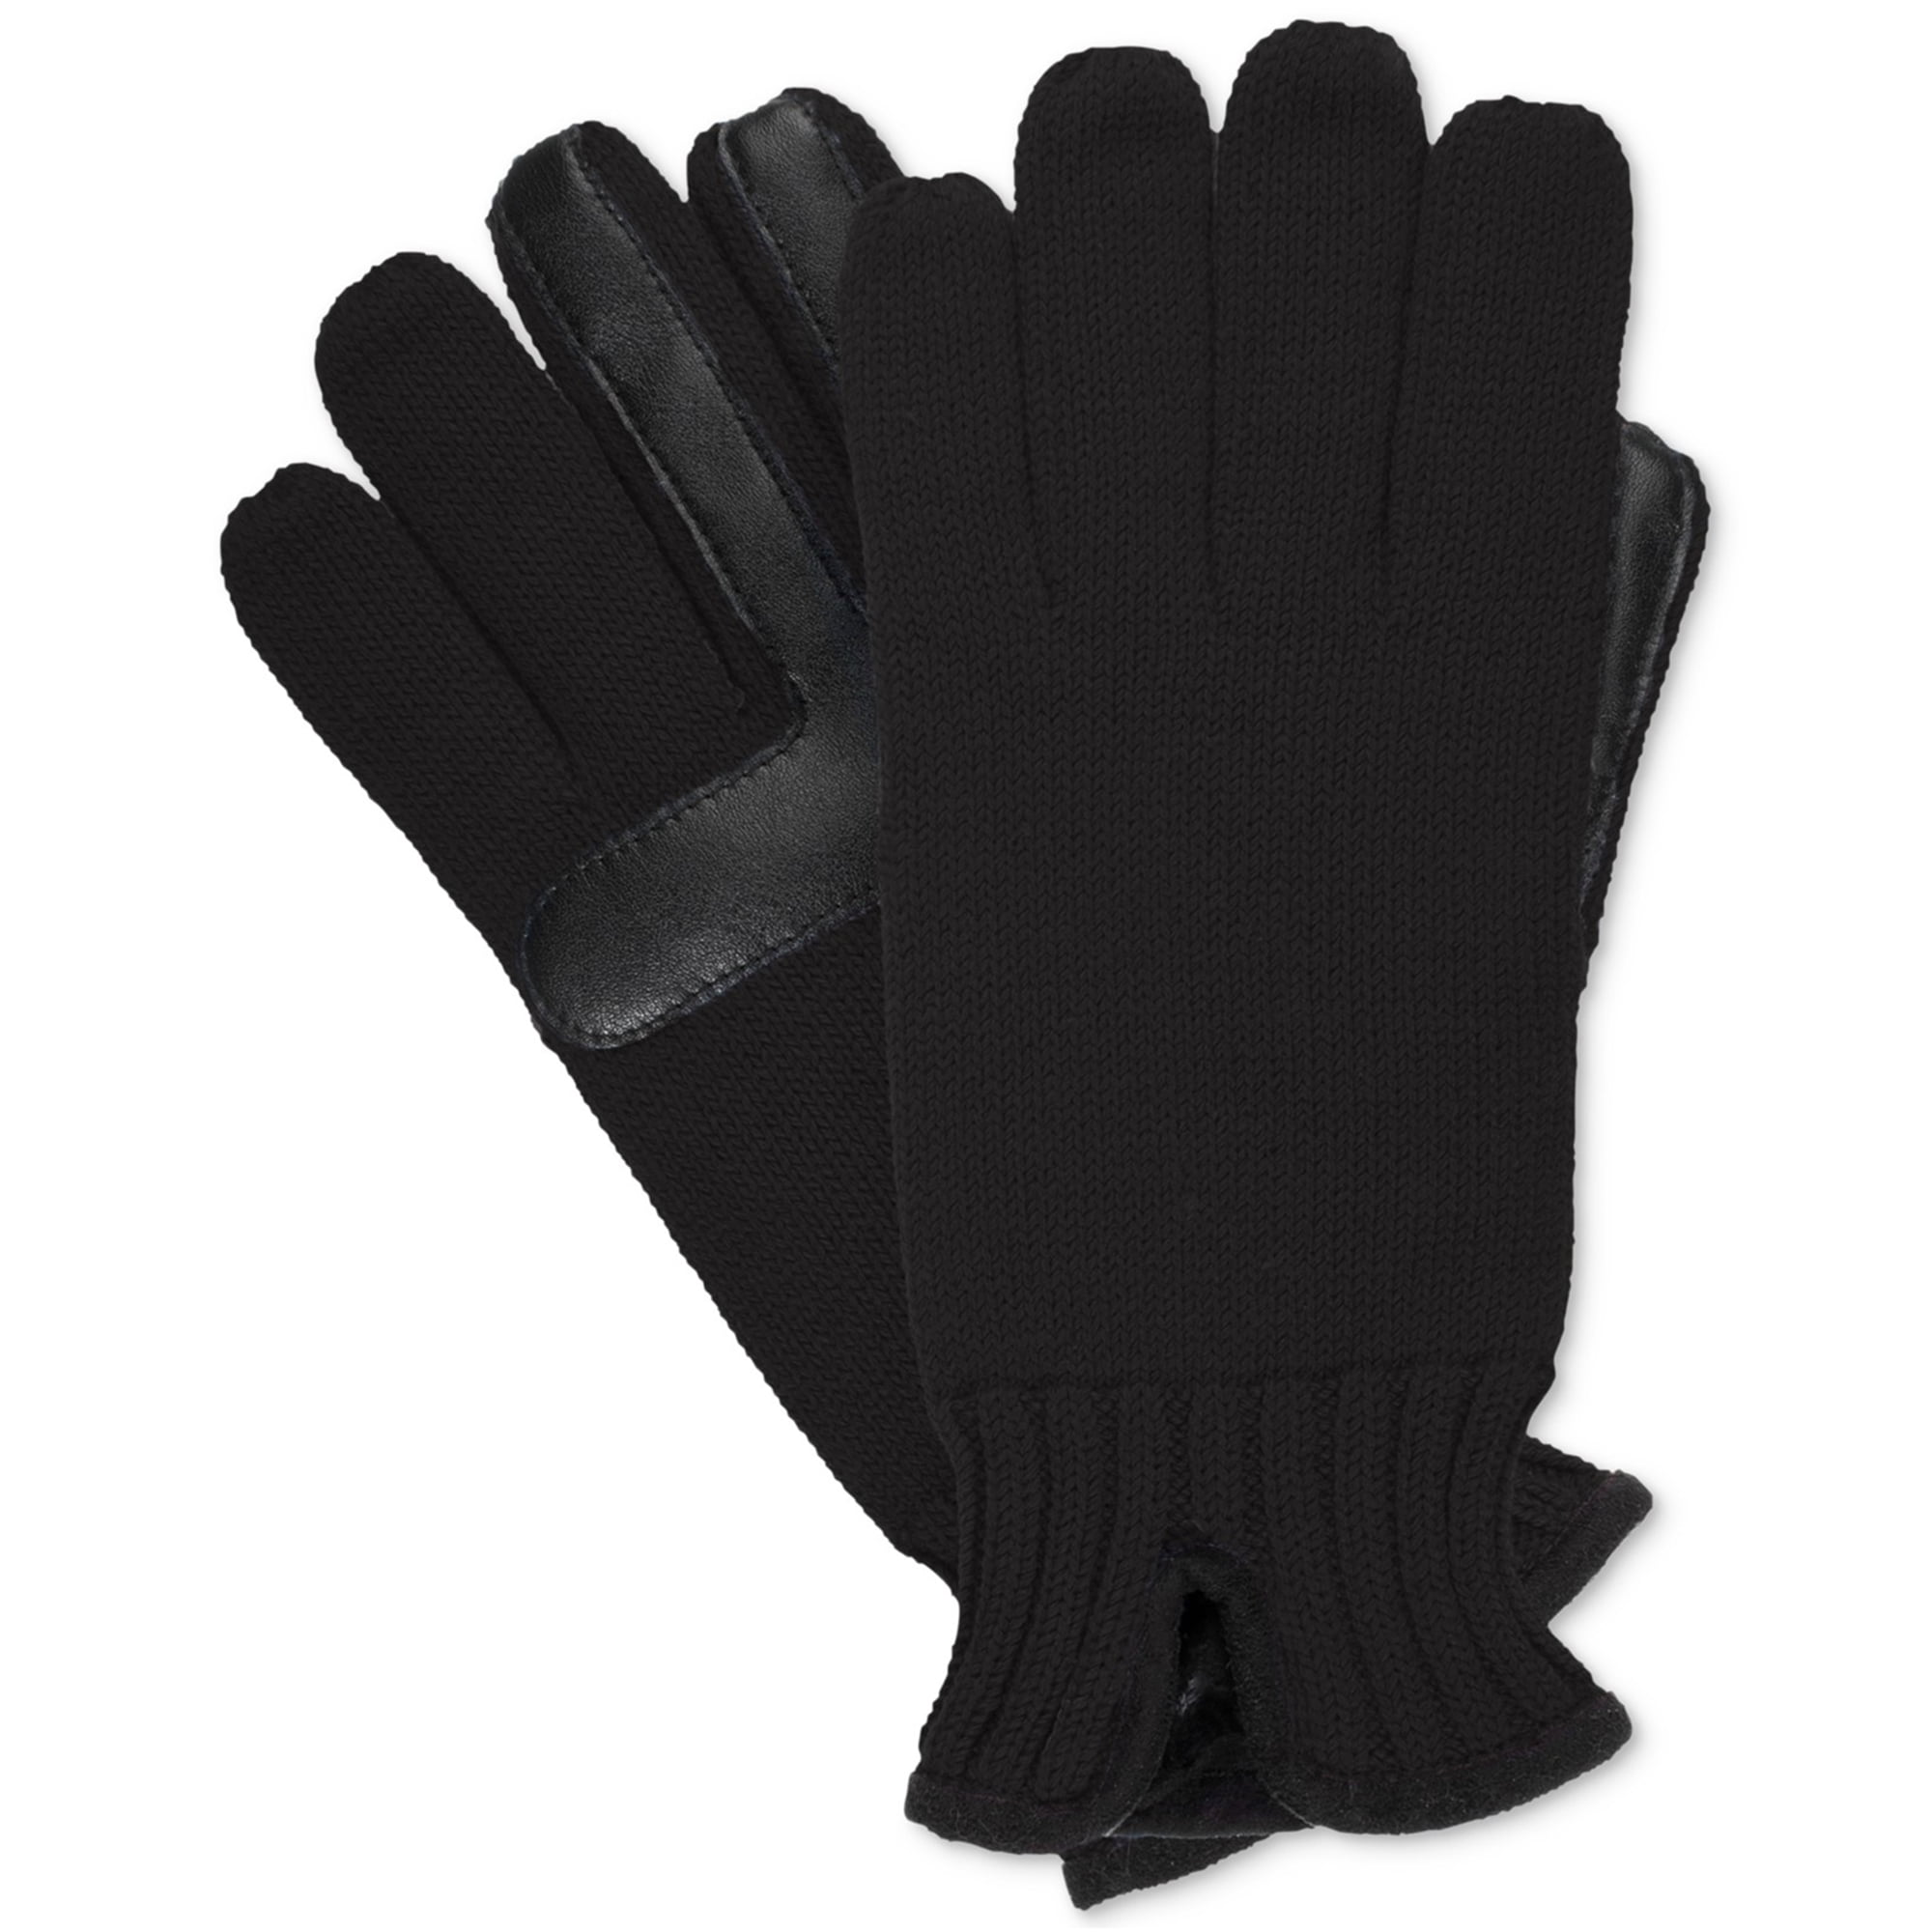 Isotoner Mens Smartdri+ Smartouch+ Gloves, Black, One Size - Walmart.com